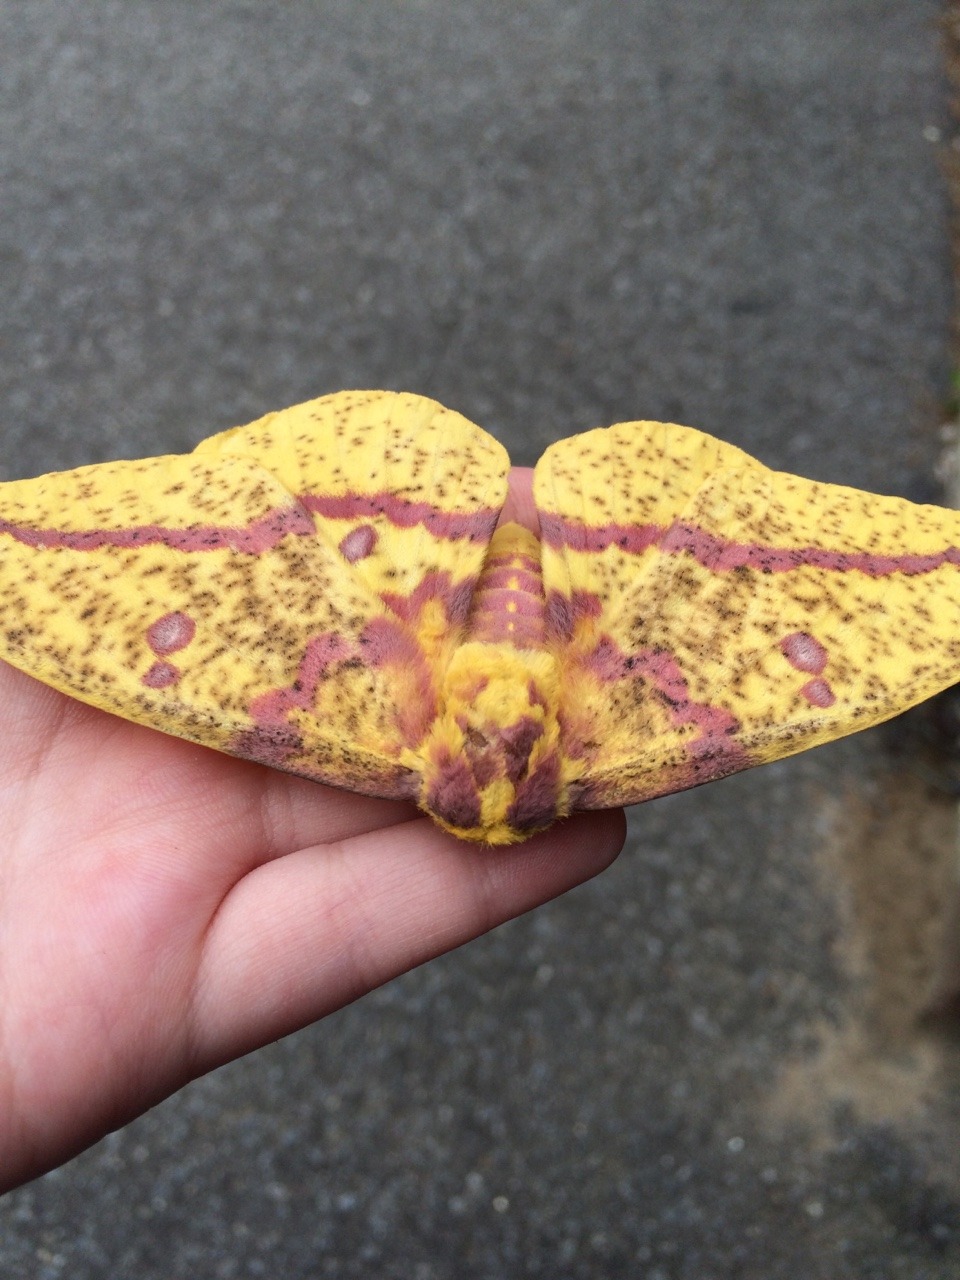 gardenofedencreationkitt:  I found a really cool Imperial Moth earlier today! Put